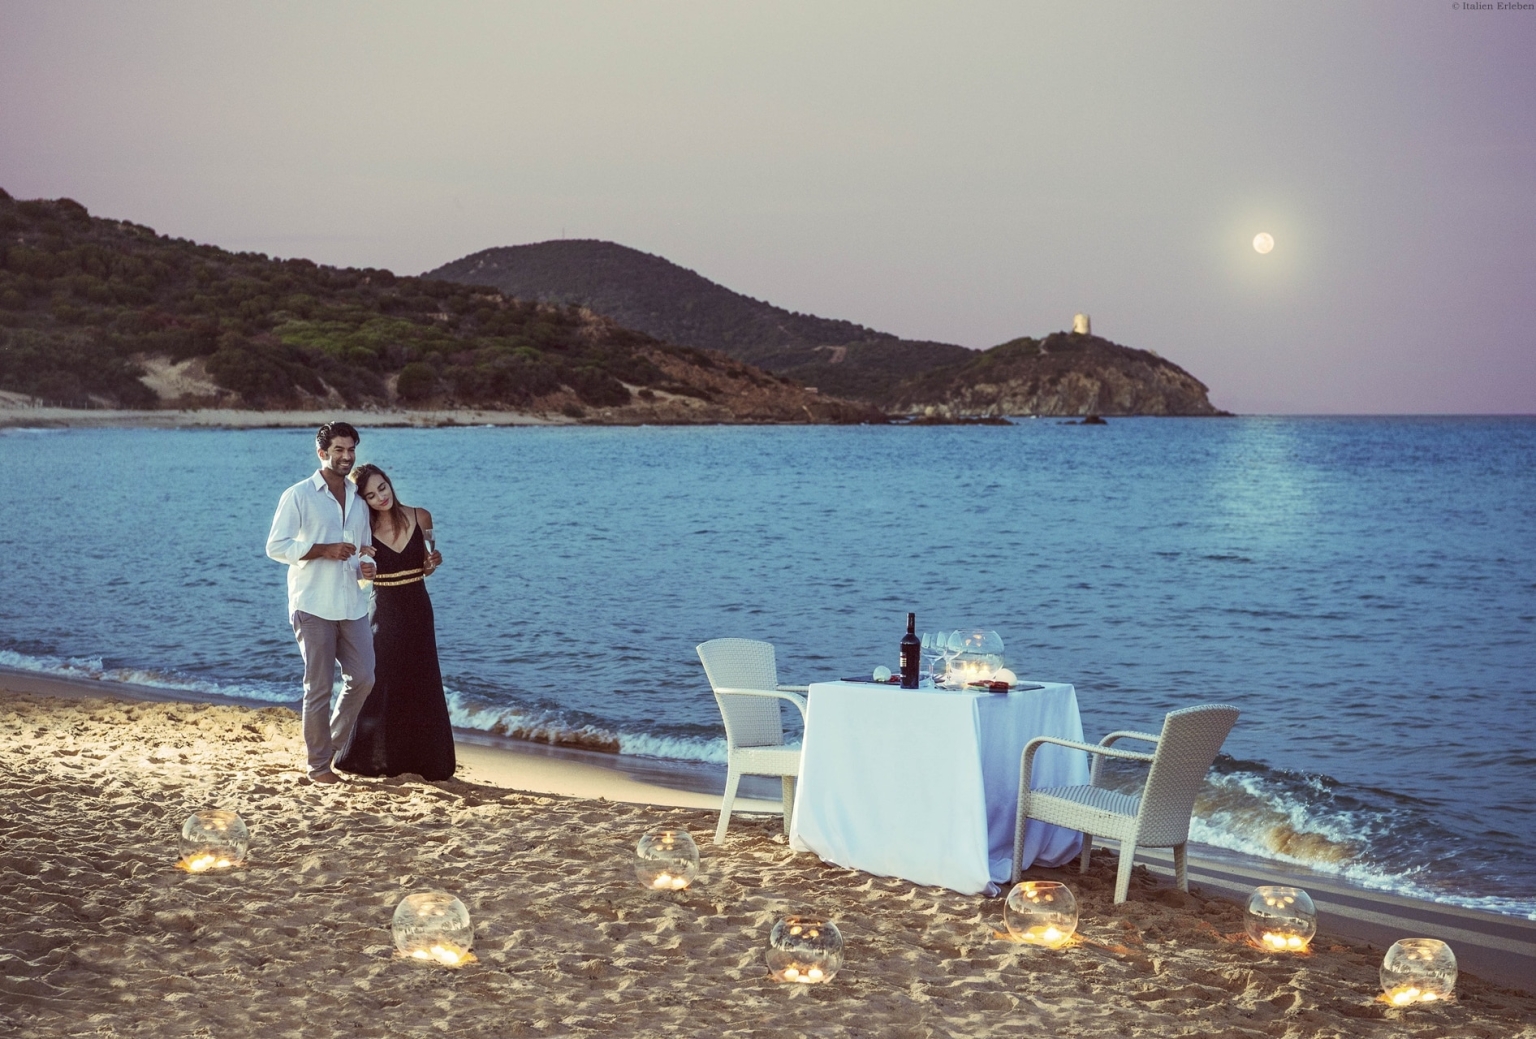 Italien Sardinien Candel Light Dinner privat Paar romantisch Strand Meer Mond